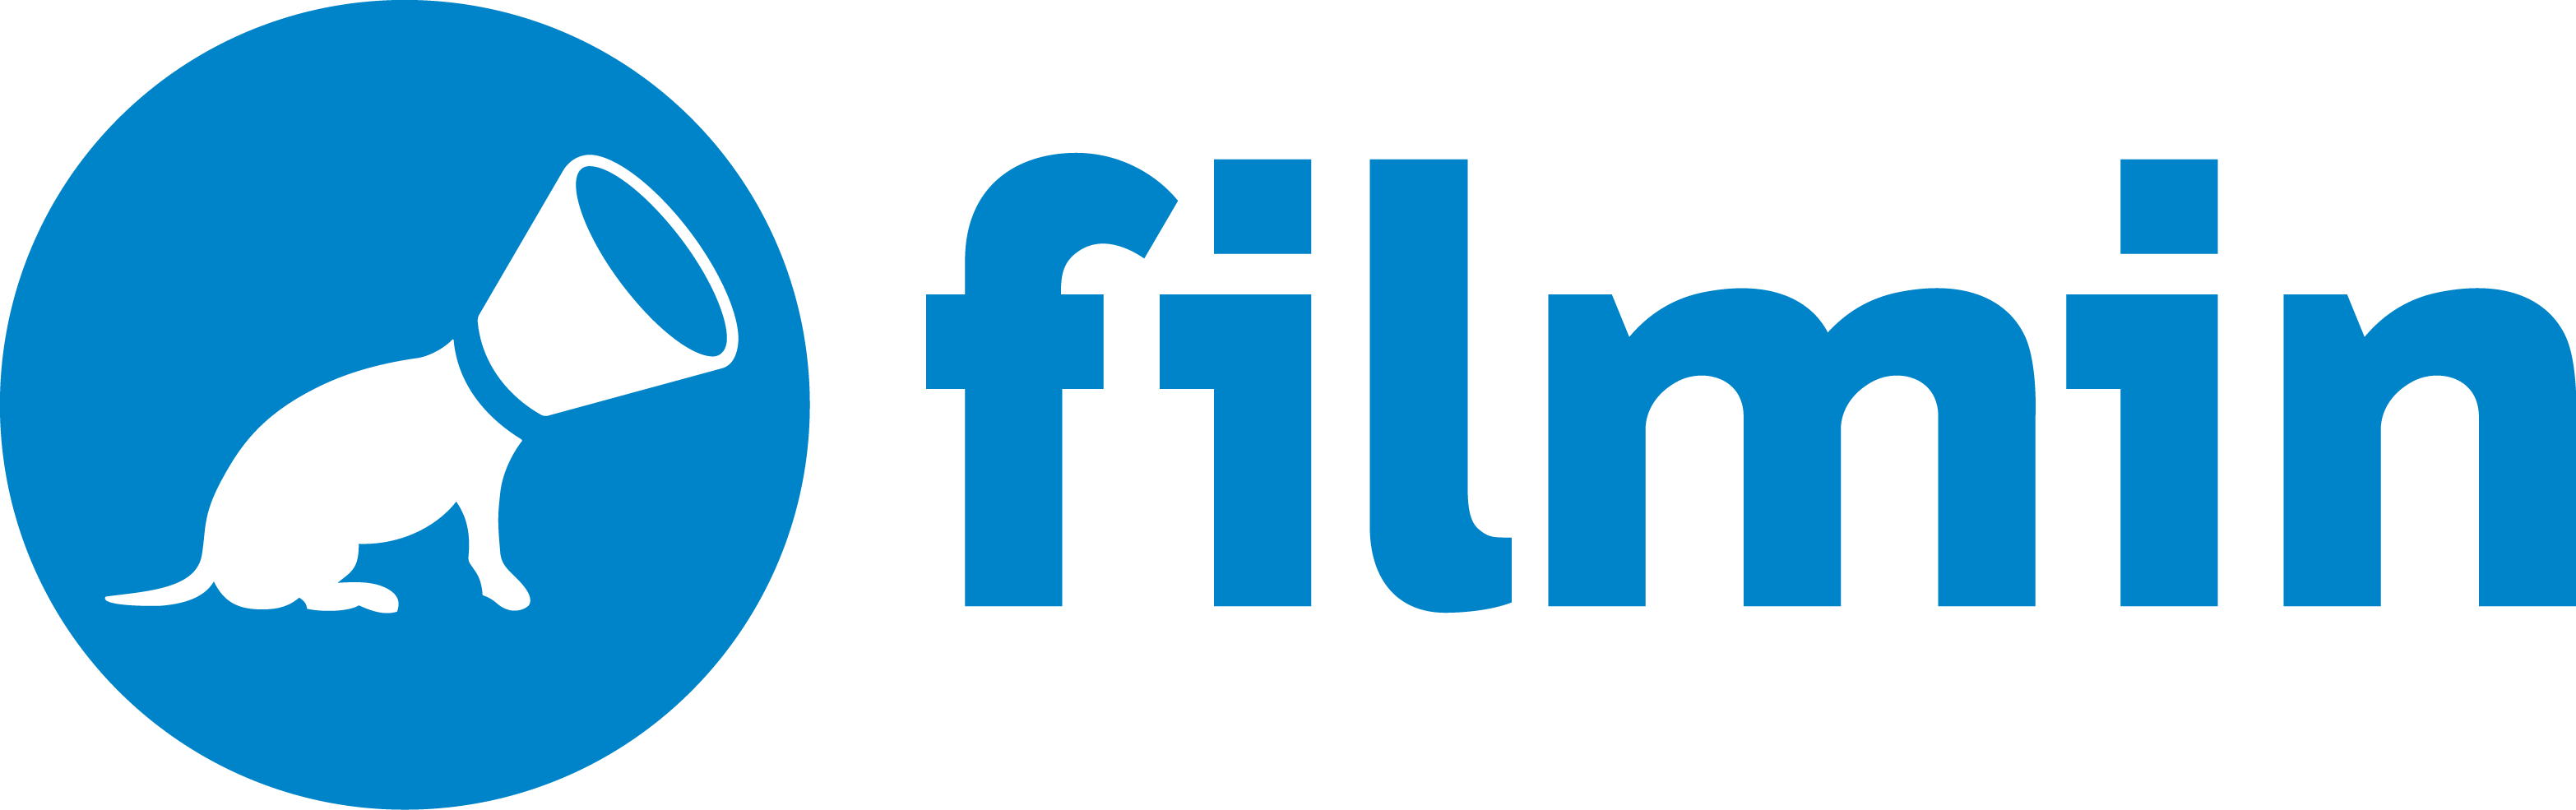 filmin_logo.png